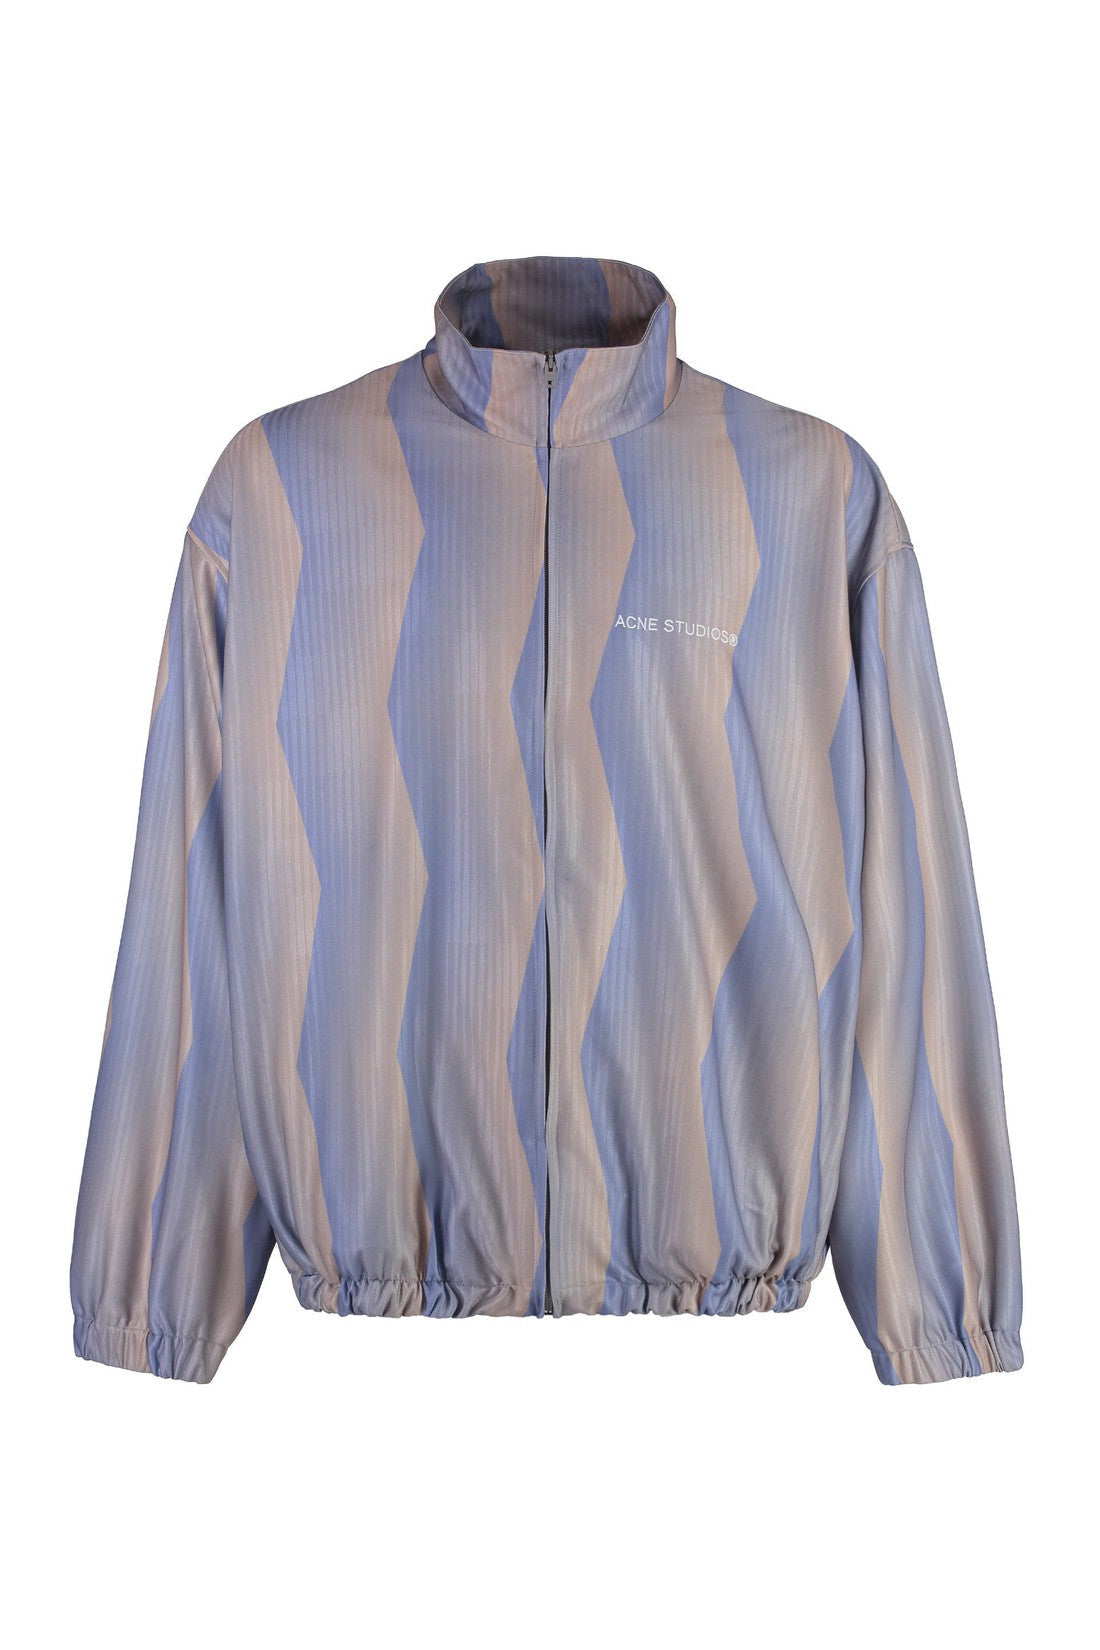 Acne Studios-OUTLET-SALE-Full-zip nylon sweatshirt-ARCHIVIST